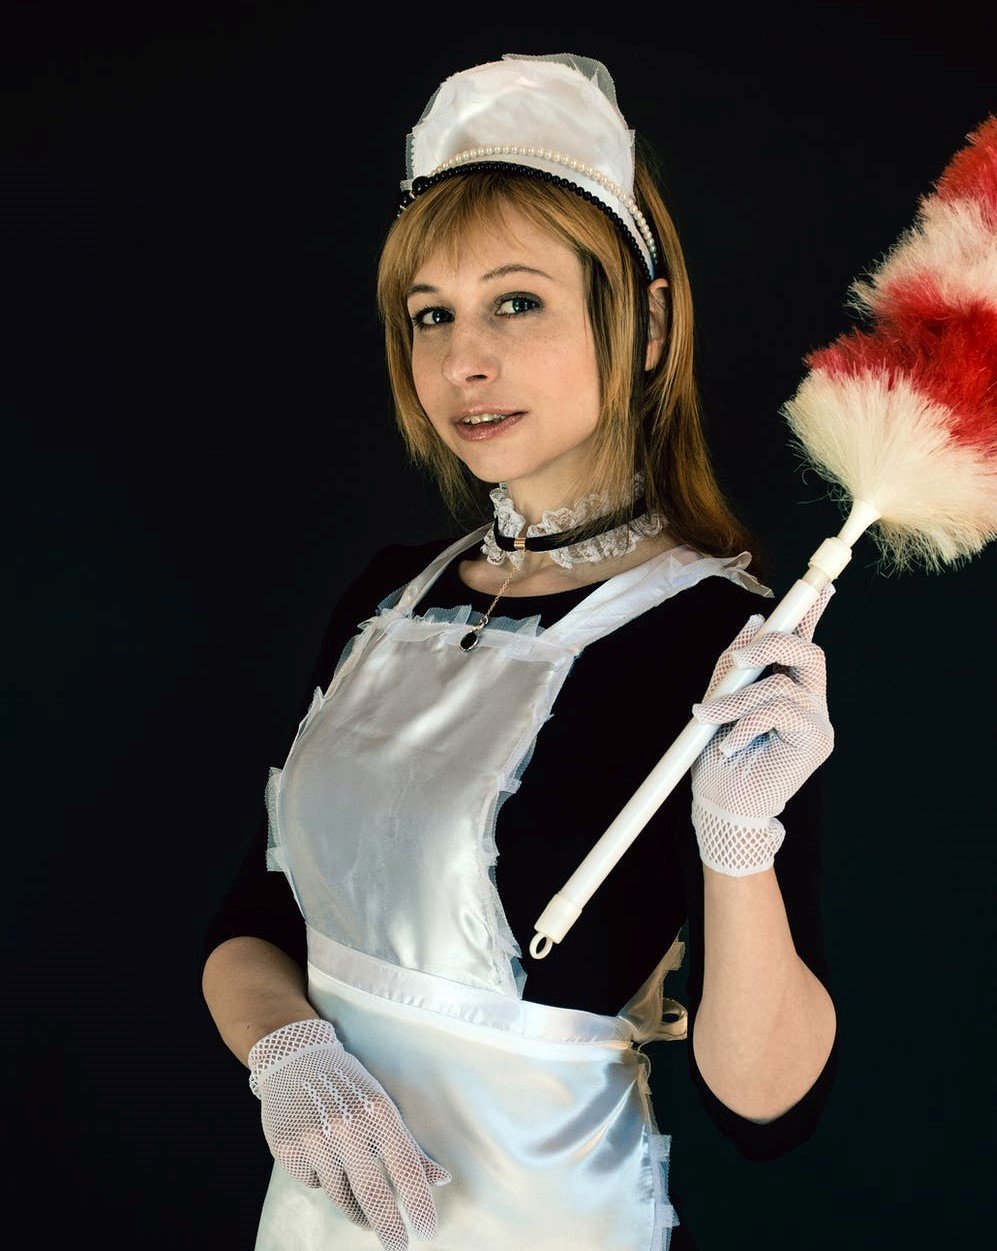 Deborah found work as a maid in a hotel | Source: Pexels